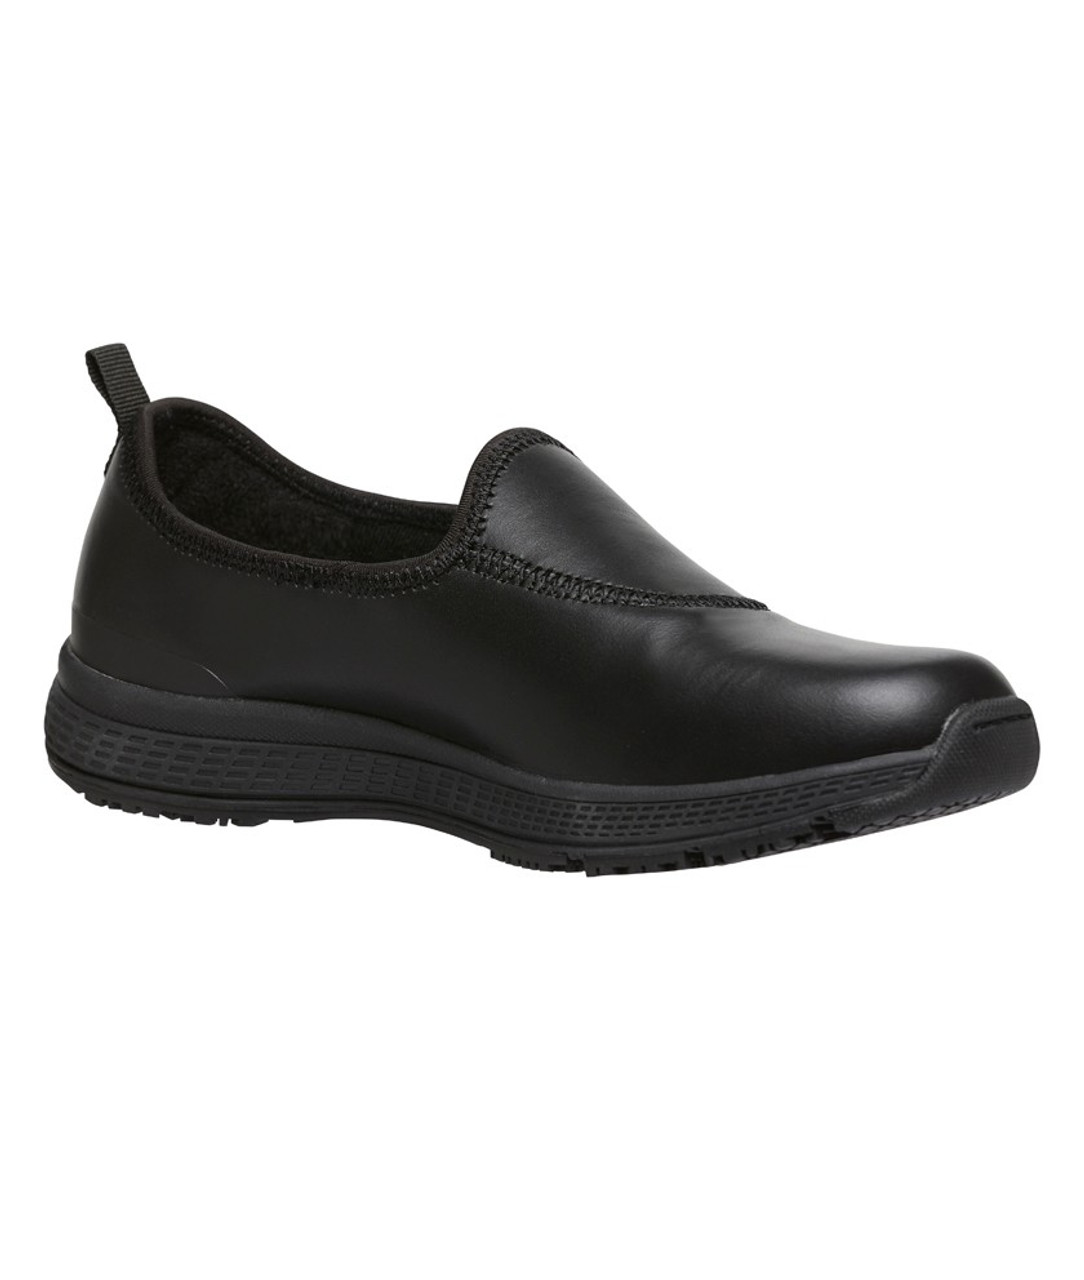 KingGee Superlite Slip On Women's Slip Resistant Work Shoes in Black ...